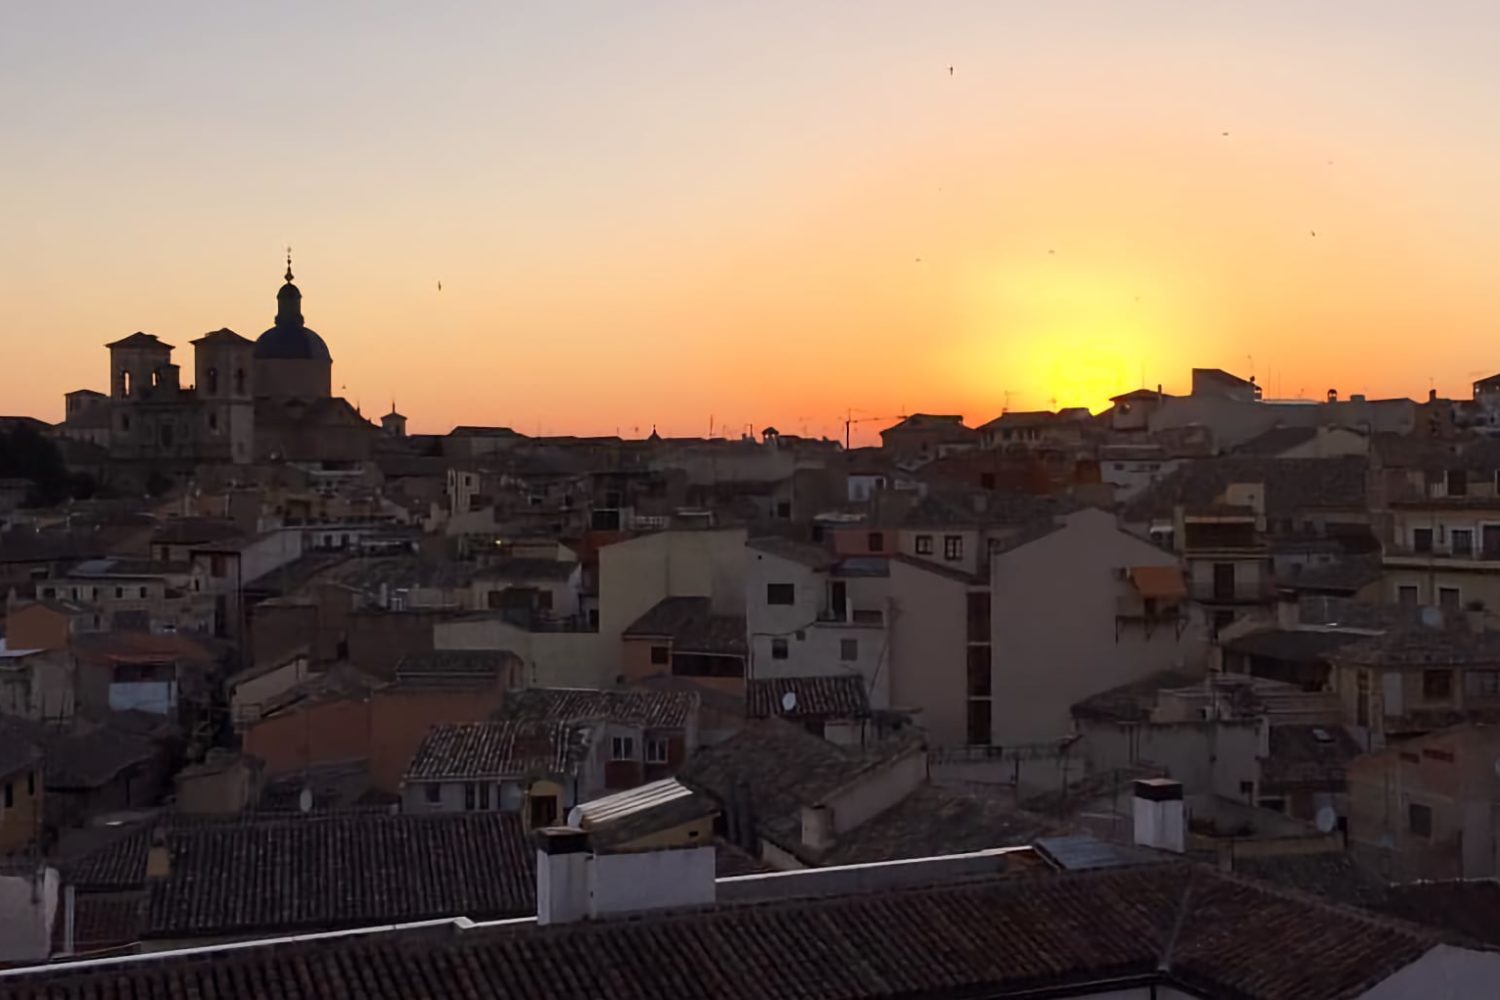 Sunset over Toledo - a UNESCO World Heritage Site